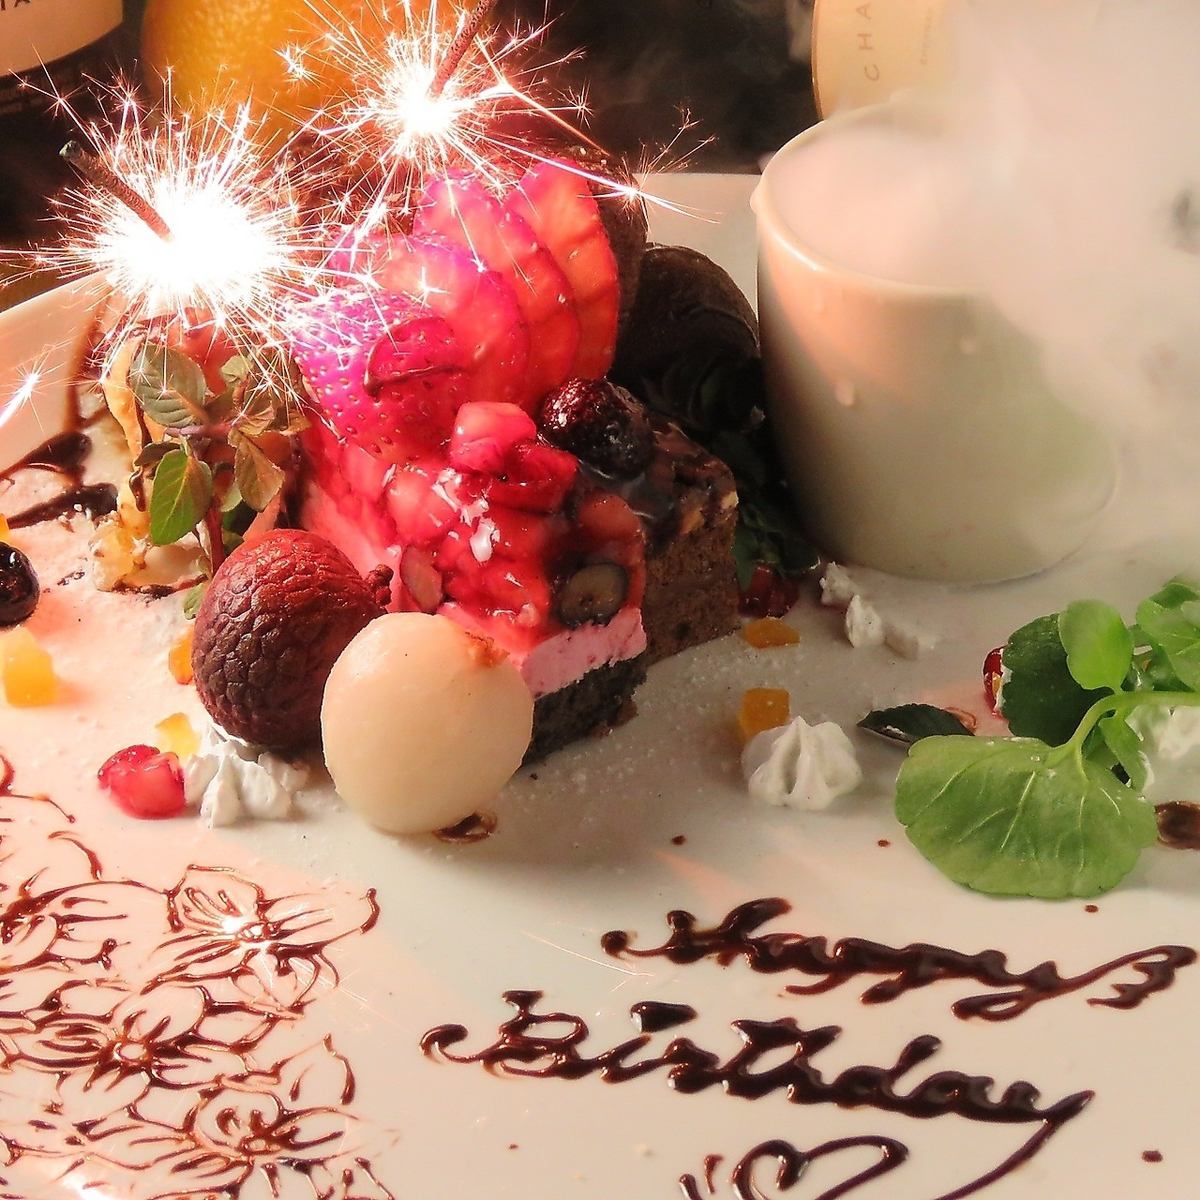 Surprise dessert plate for dates, anniversaries, and birthdays★